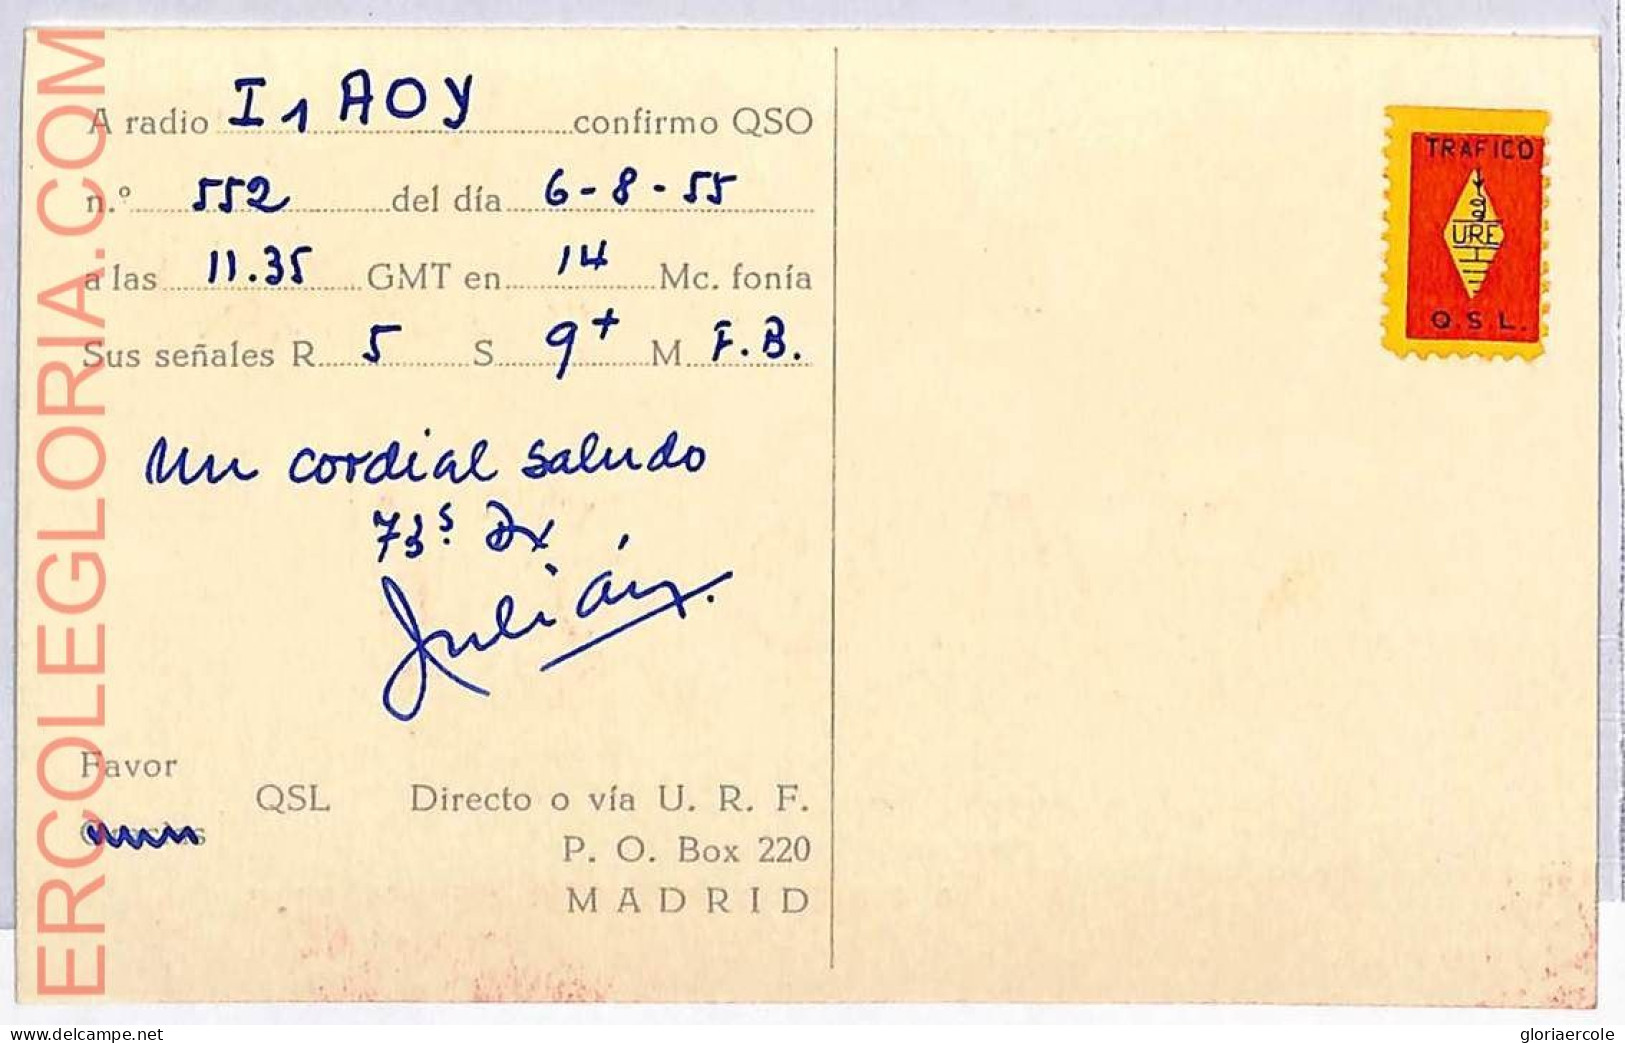 Ad9256 - SPAIN - RADIO FREQUENCY CARD  - Madrid -  1955 - Radio